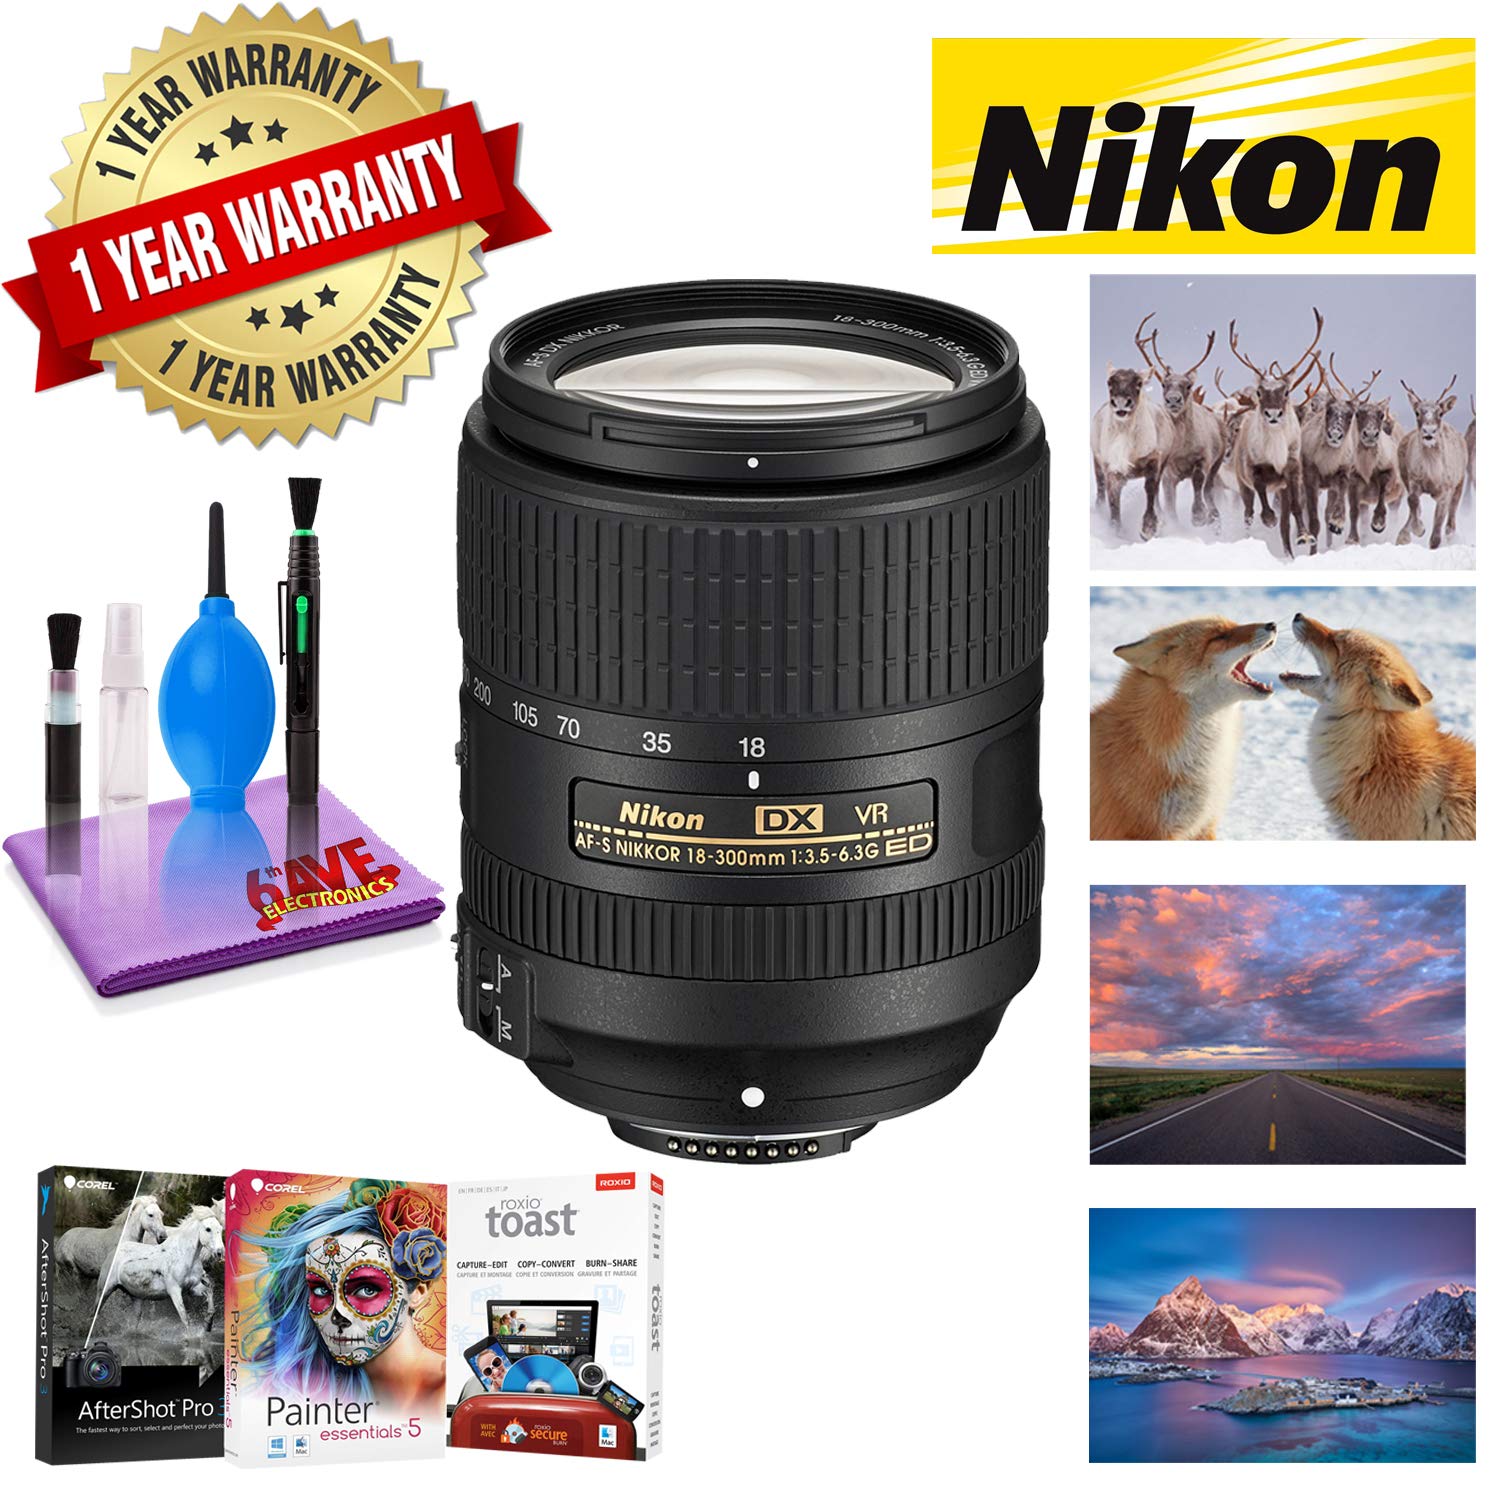 NIKON 18-300MM F/3.5-6.3G ED AF-S DX VR Lens with 1 Year Warranty and Corel Mac Photo Essentials Software Bundle